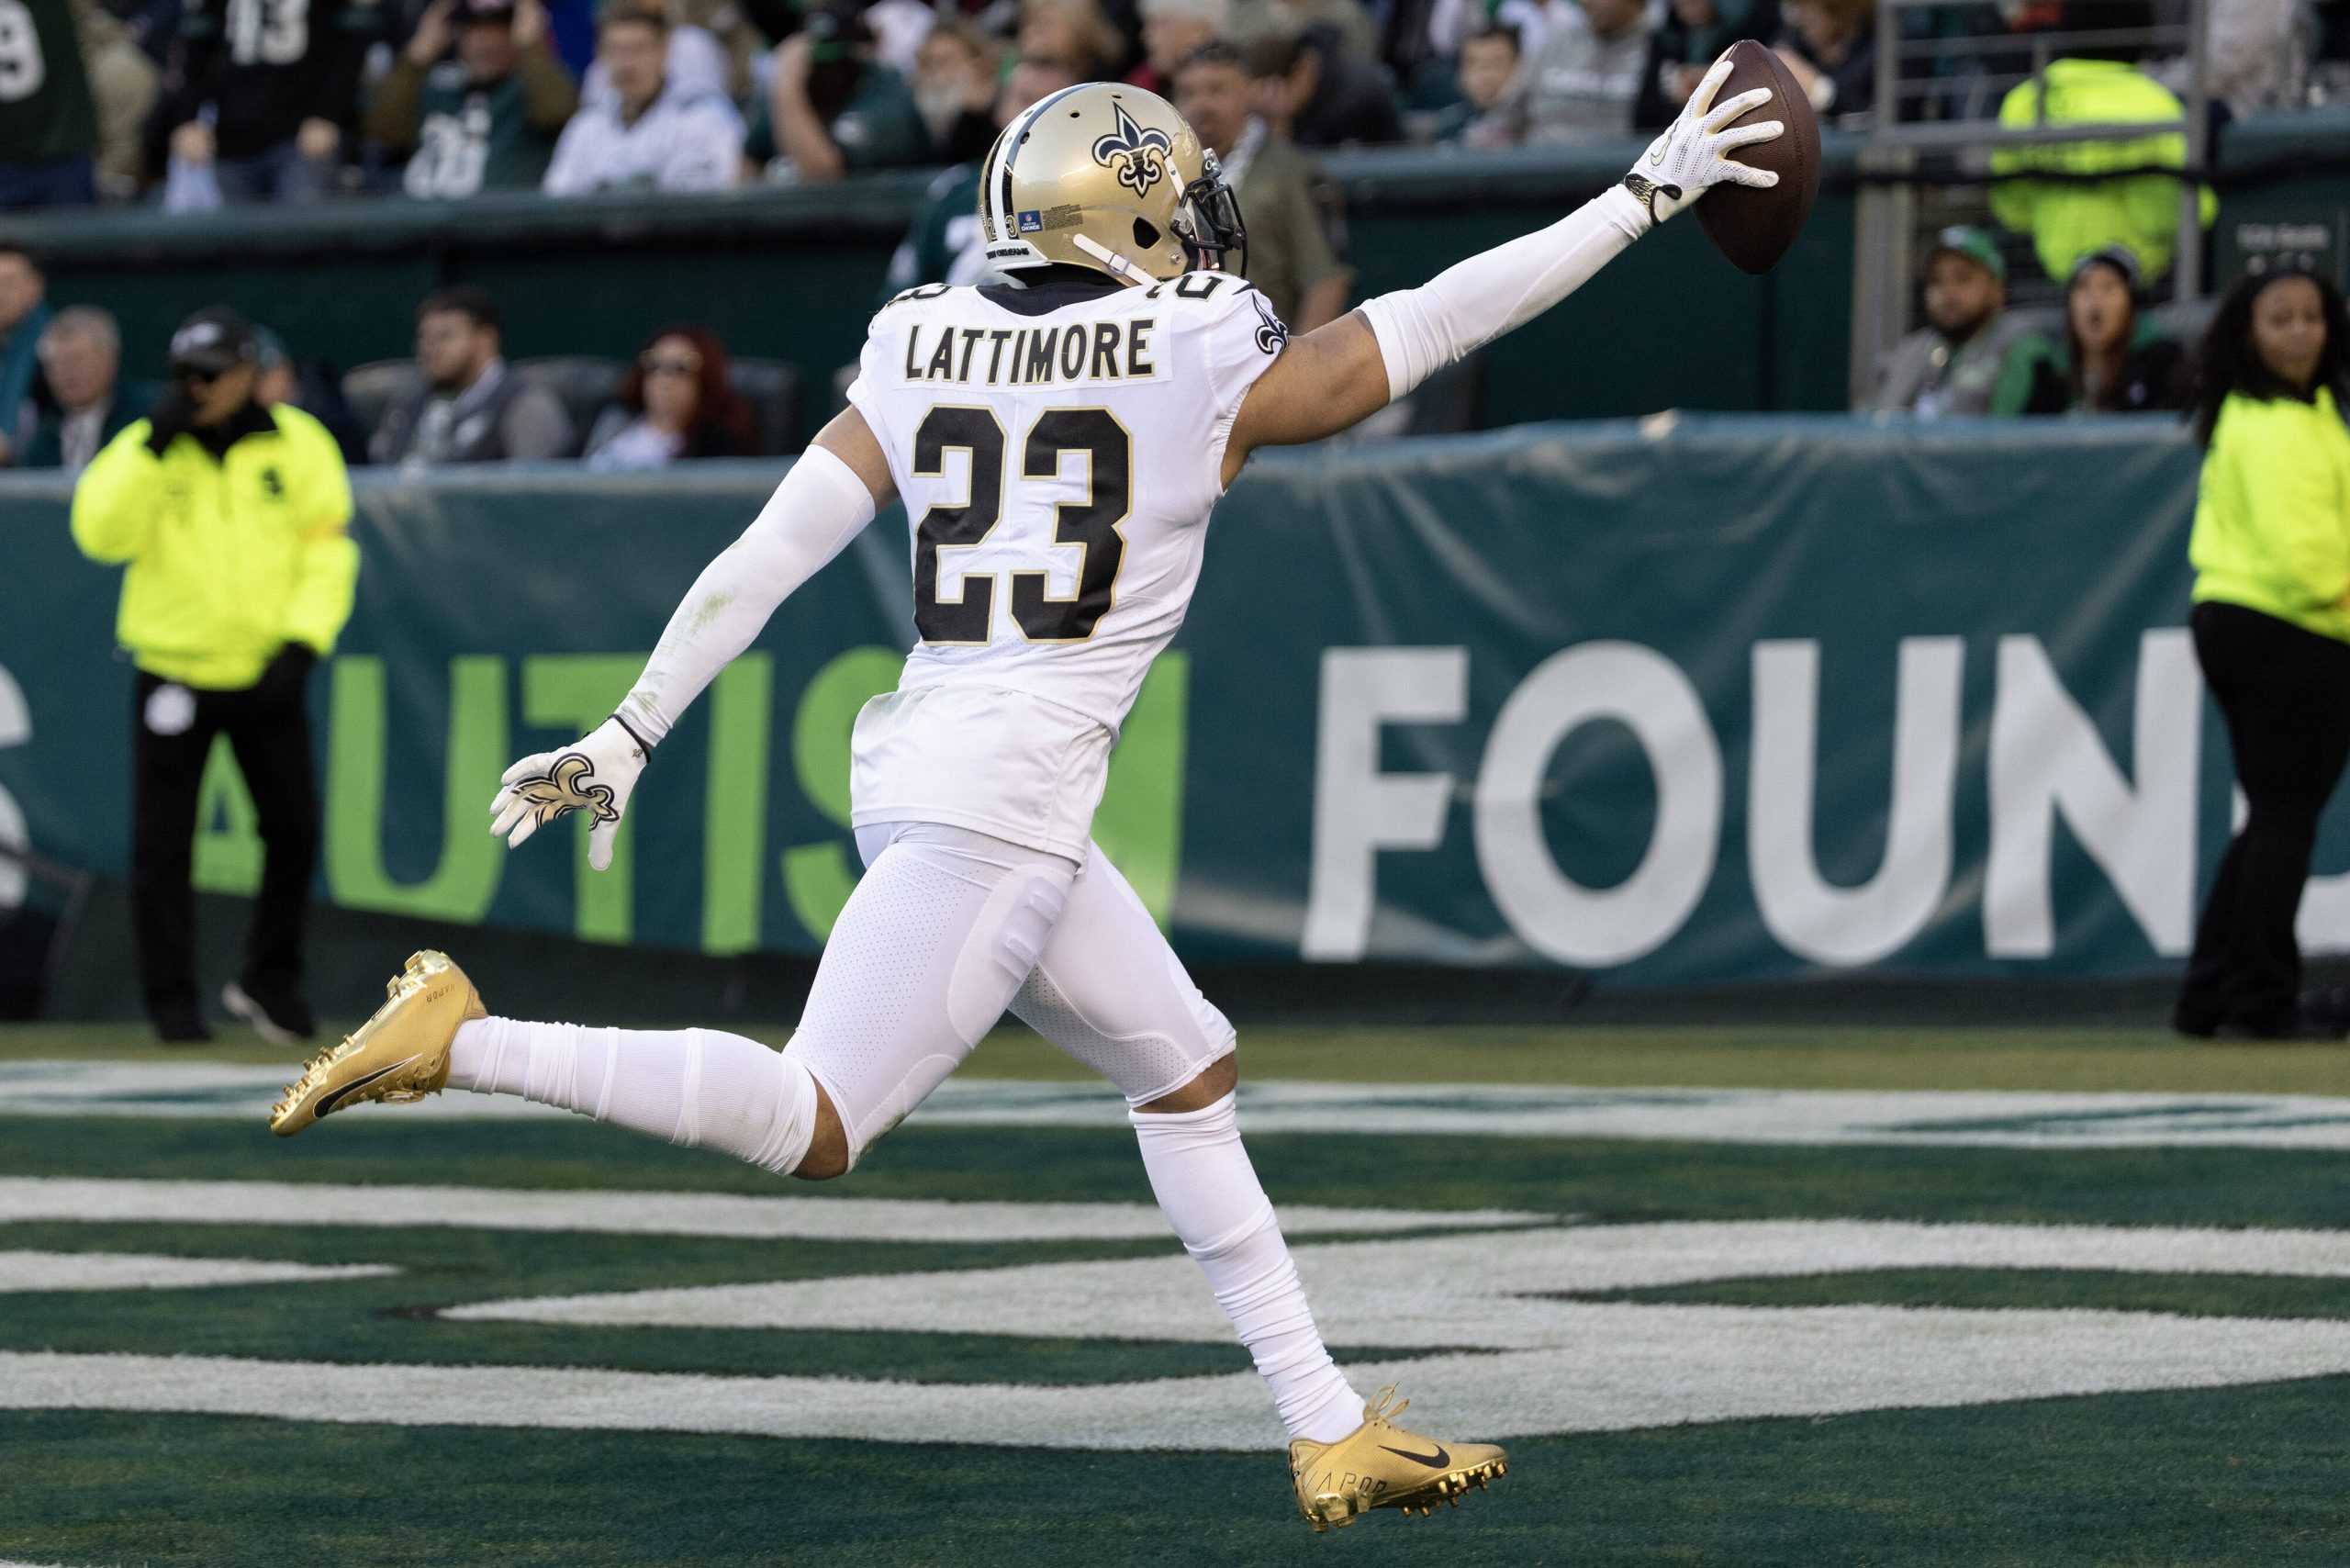 FootballR - NFL - Saints NFL-Spieler Marshon Lattimore feiert einen Touchdown.